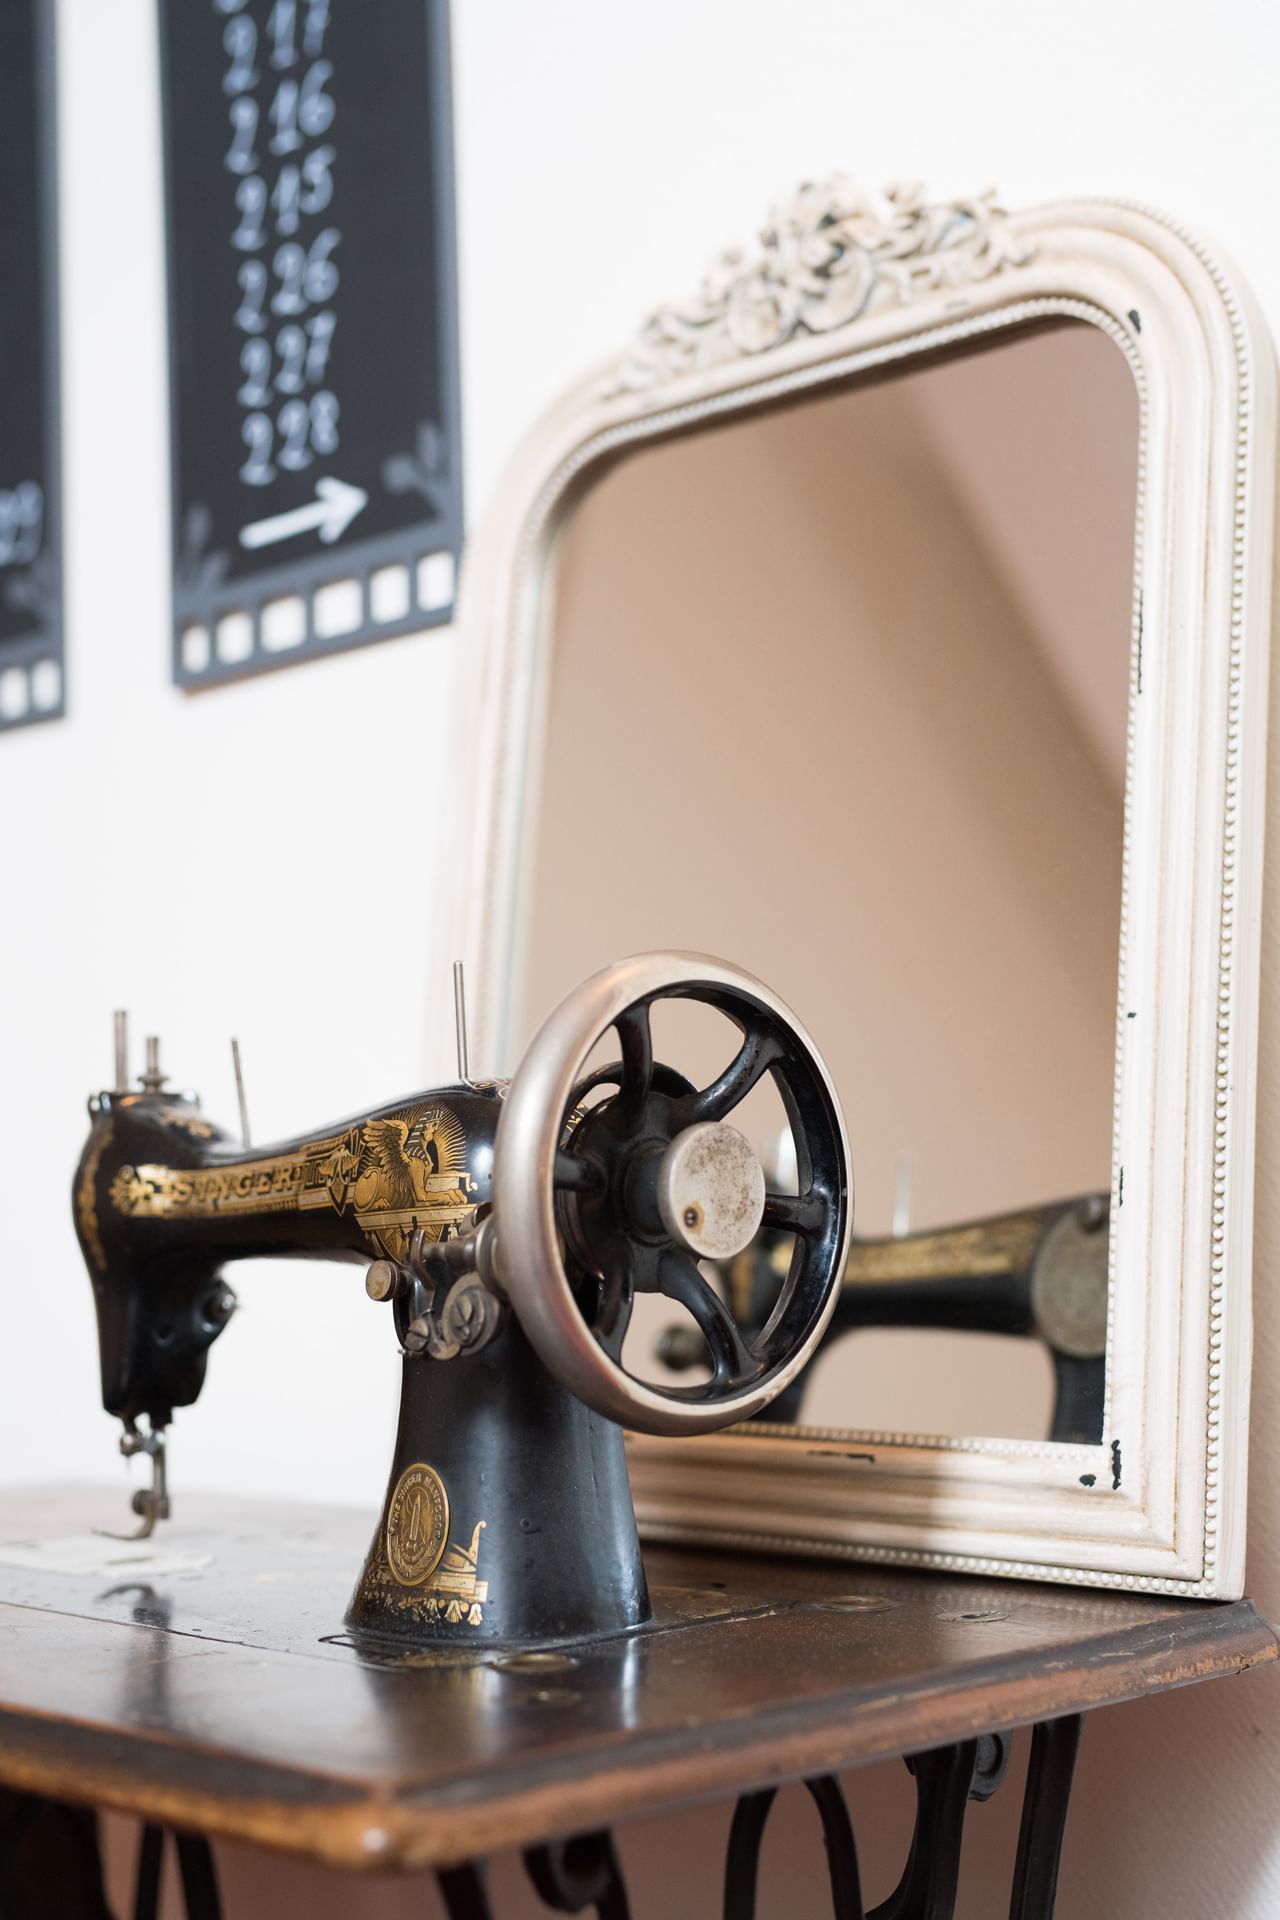 Sewing machine beside the mirror at Le Kastelberg